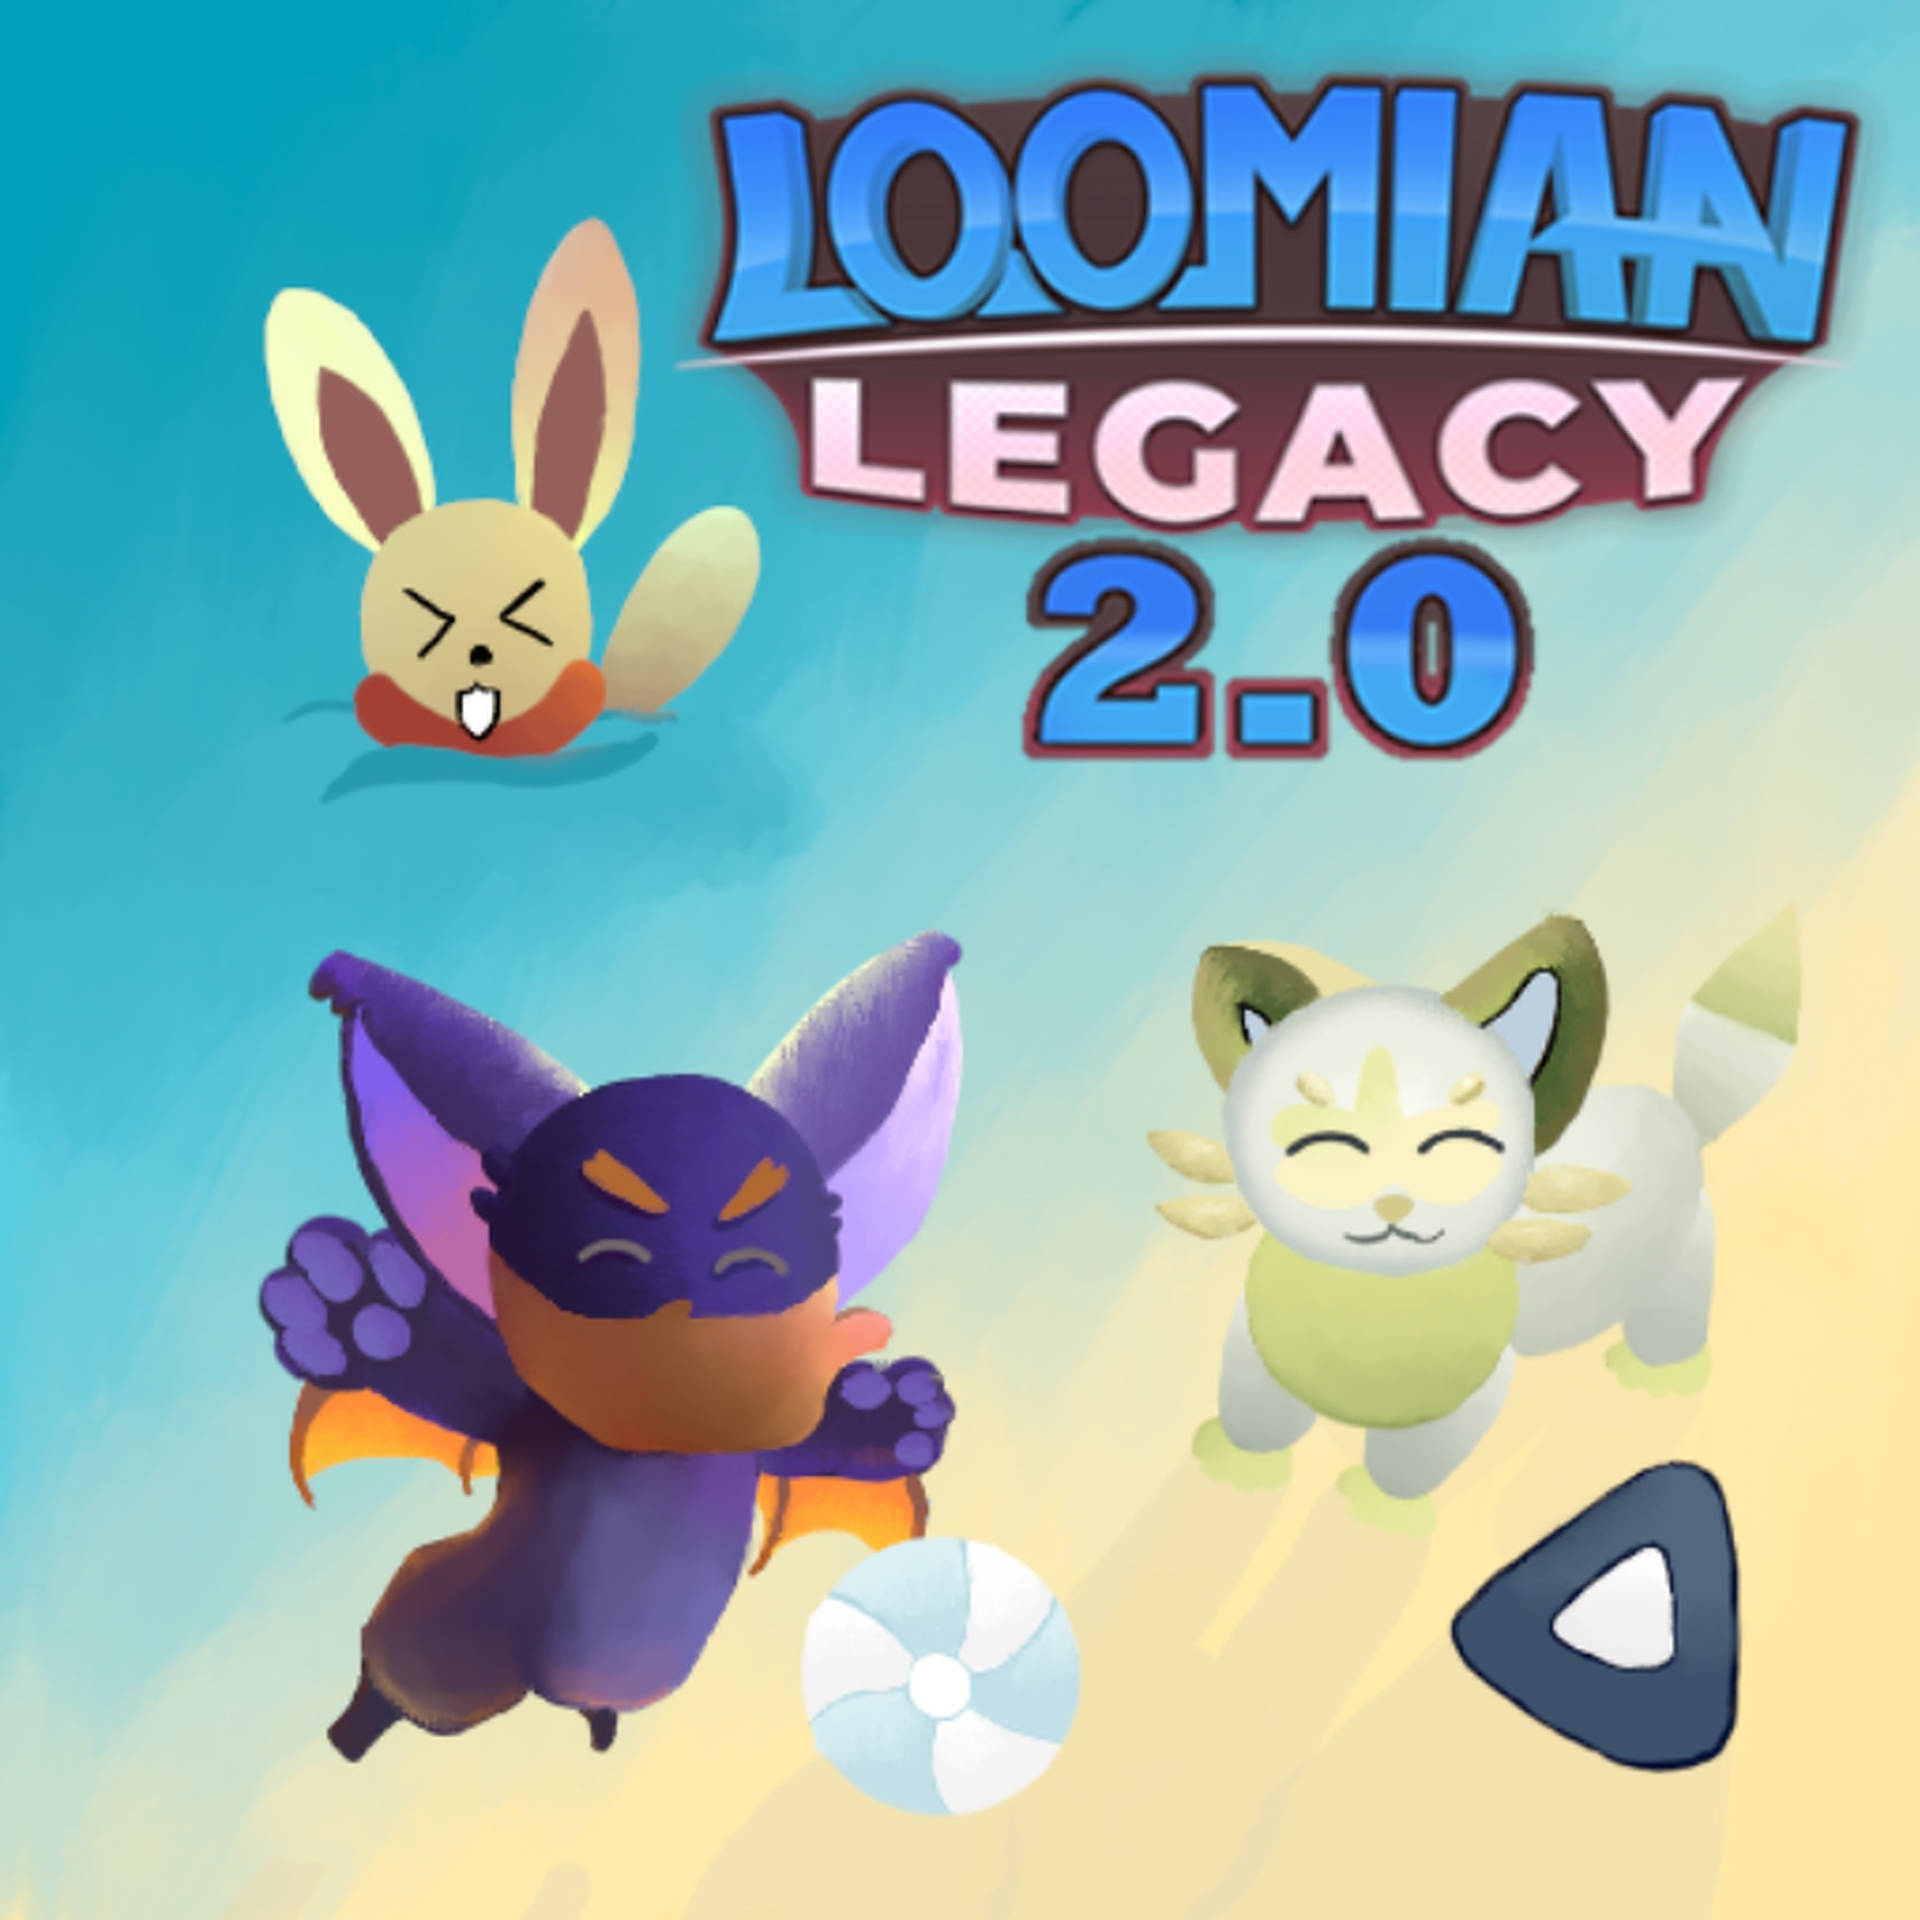 Loomian Legacy 2.0 Version Wallpaper